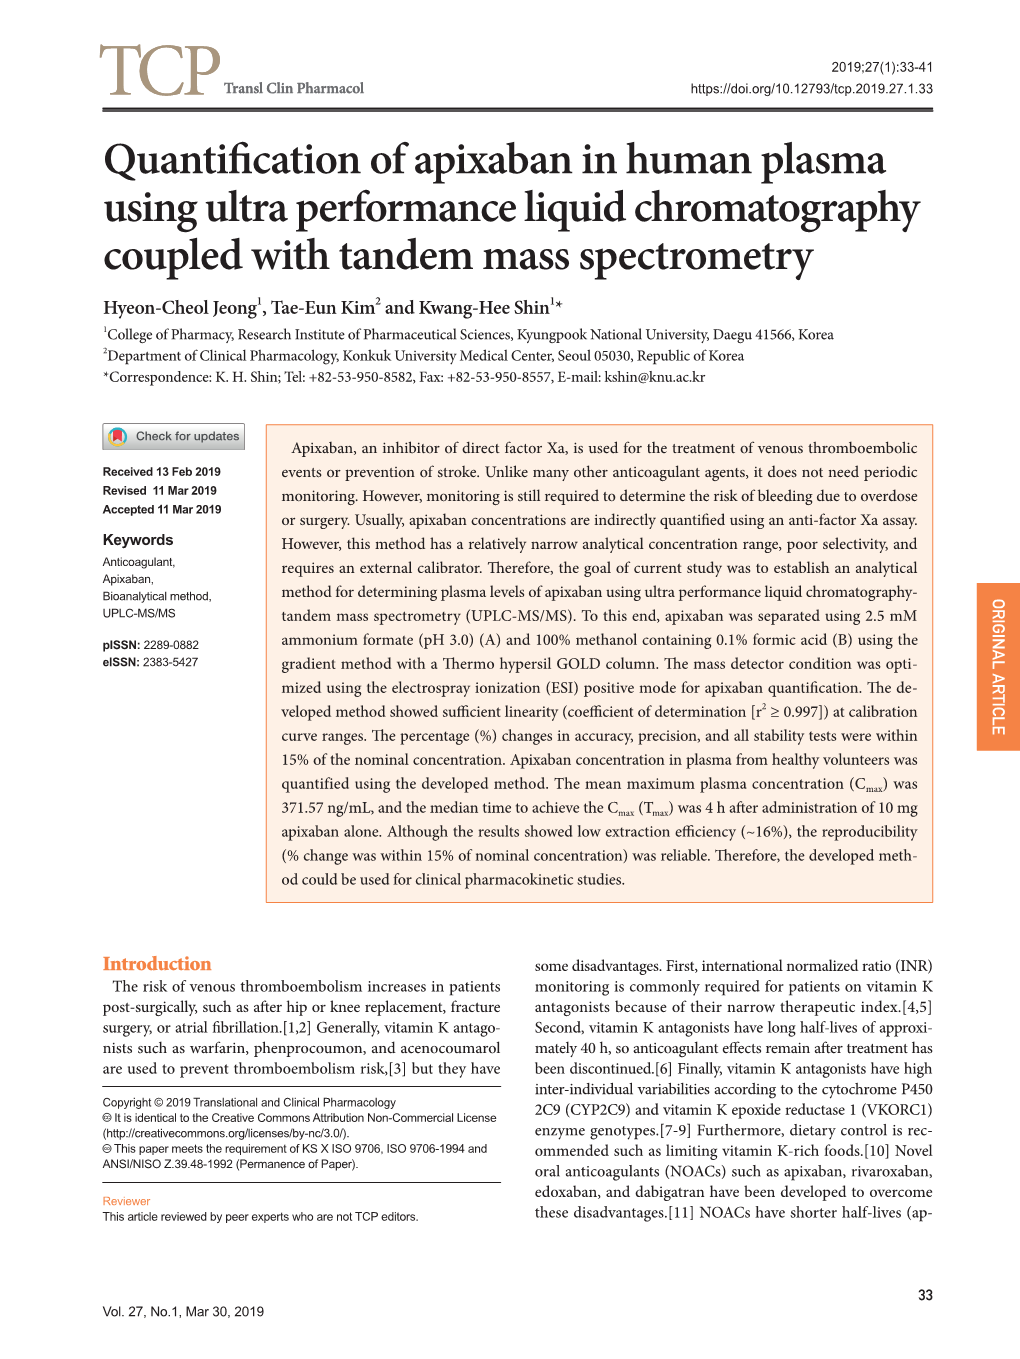 Quantification of Apixaban in Human Plasma Using Ultra Performance Liquid Chromatography Coupled with Tandem Mass Spectrometry